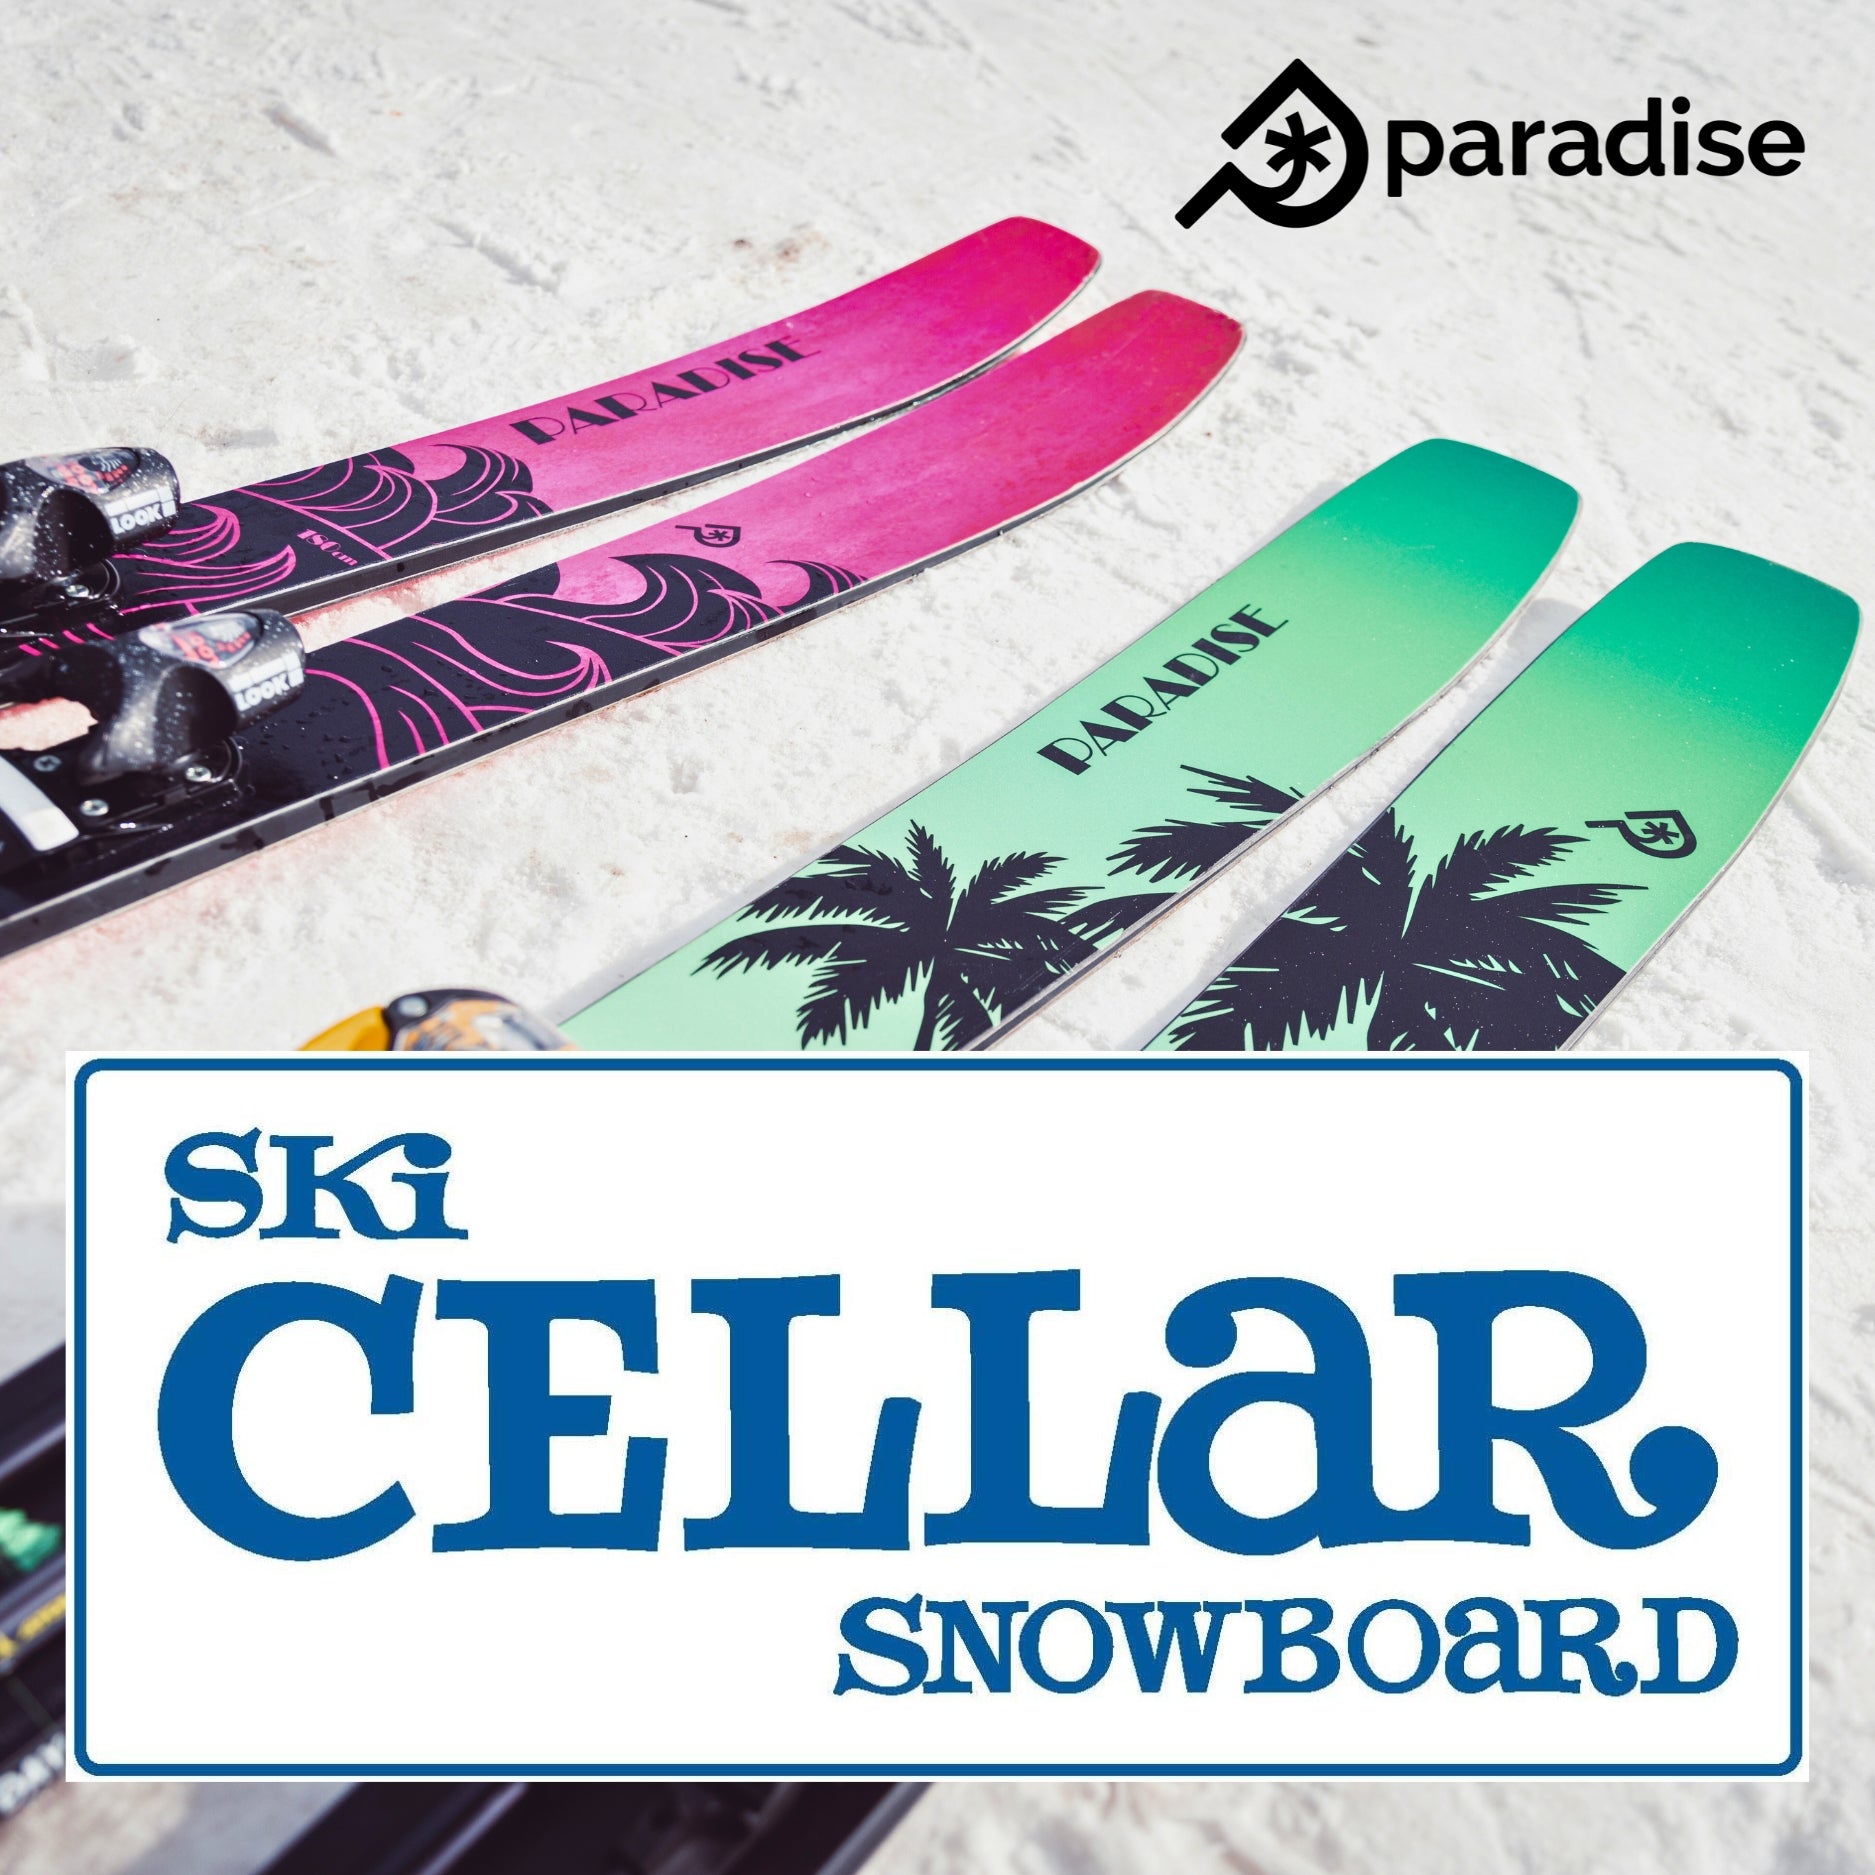 Paradise is now available at Ski Cellar Snowboard - Calgary, Alberta